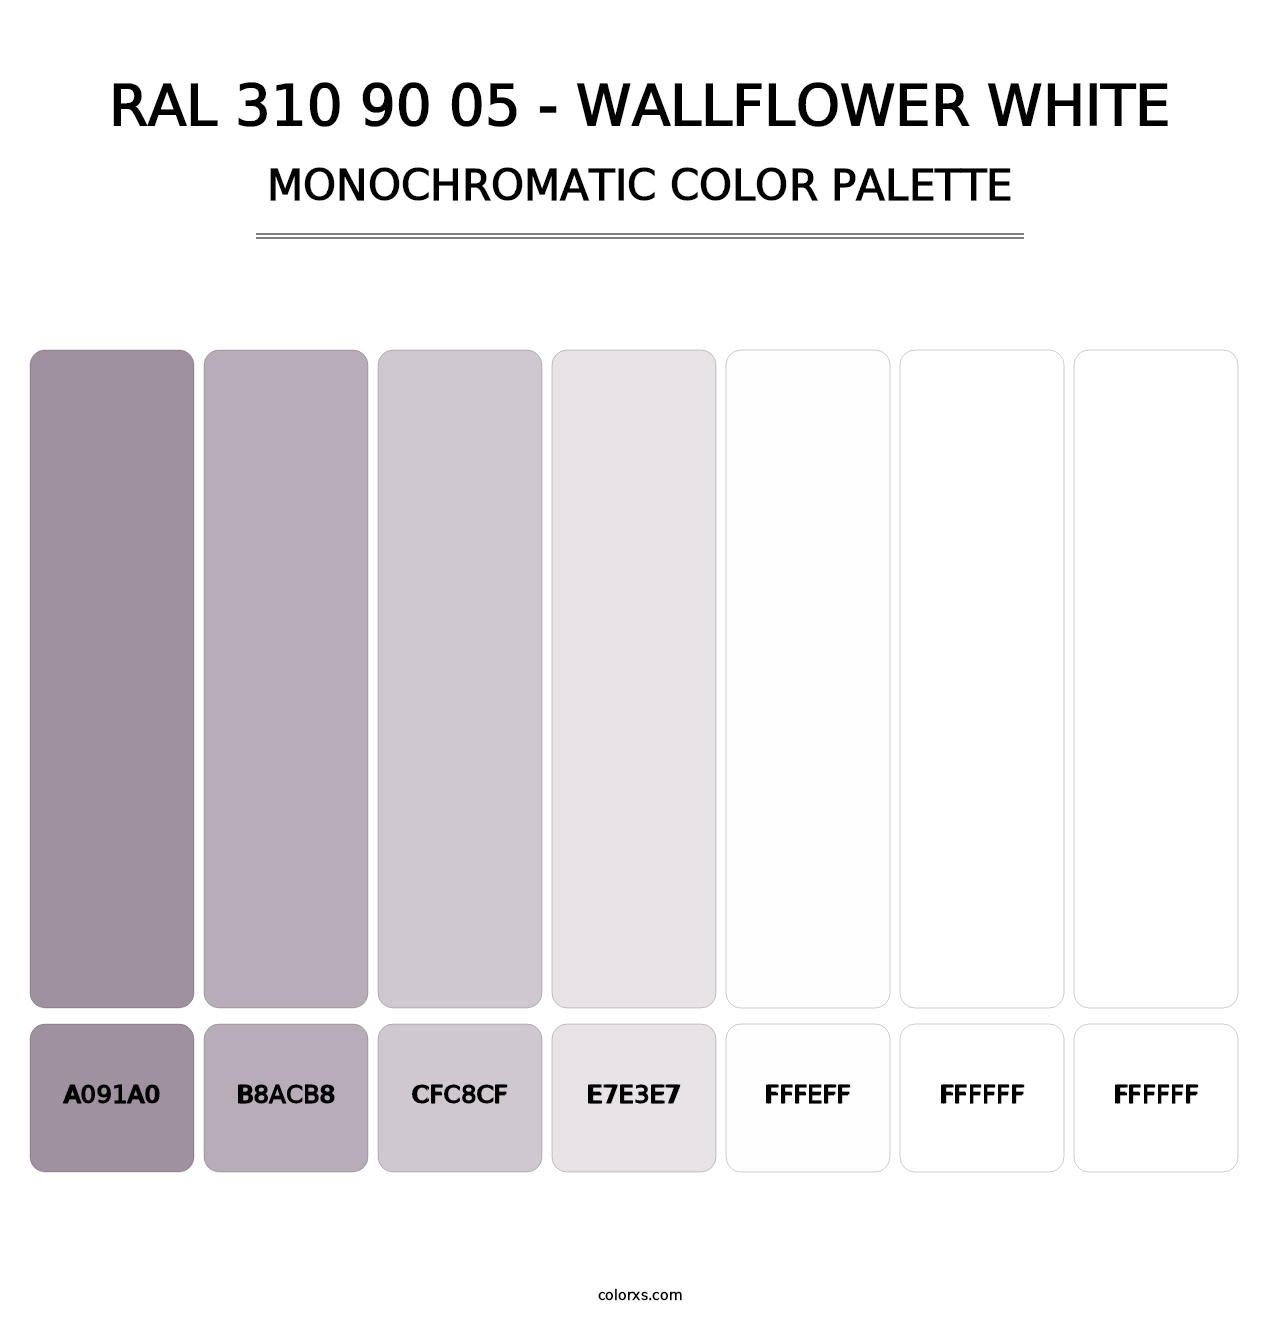 RAL 310 90 05 - Wallflower White - Monochromatic Color Palette